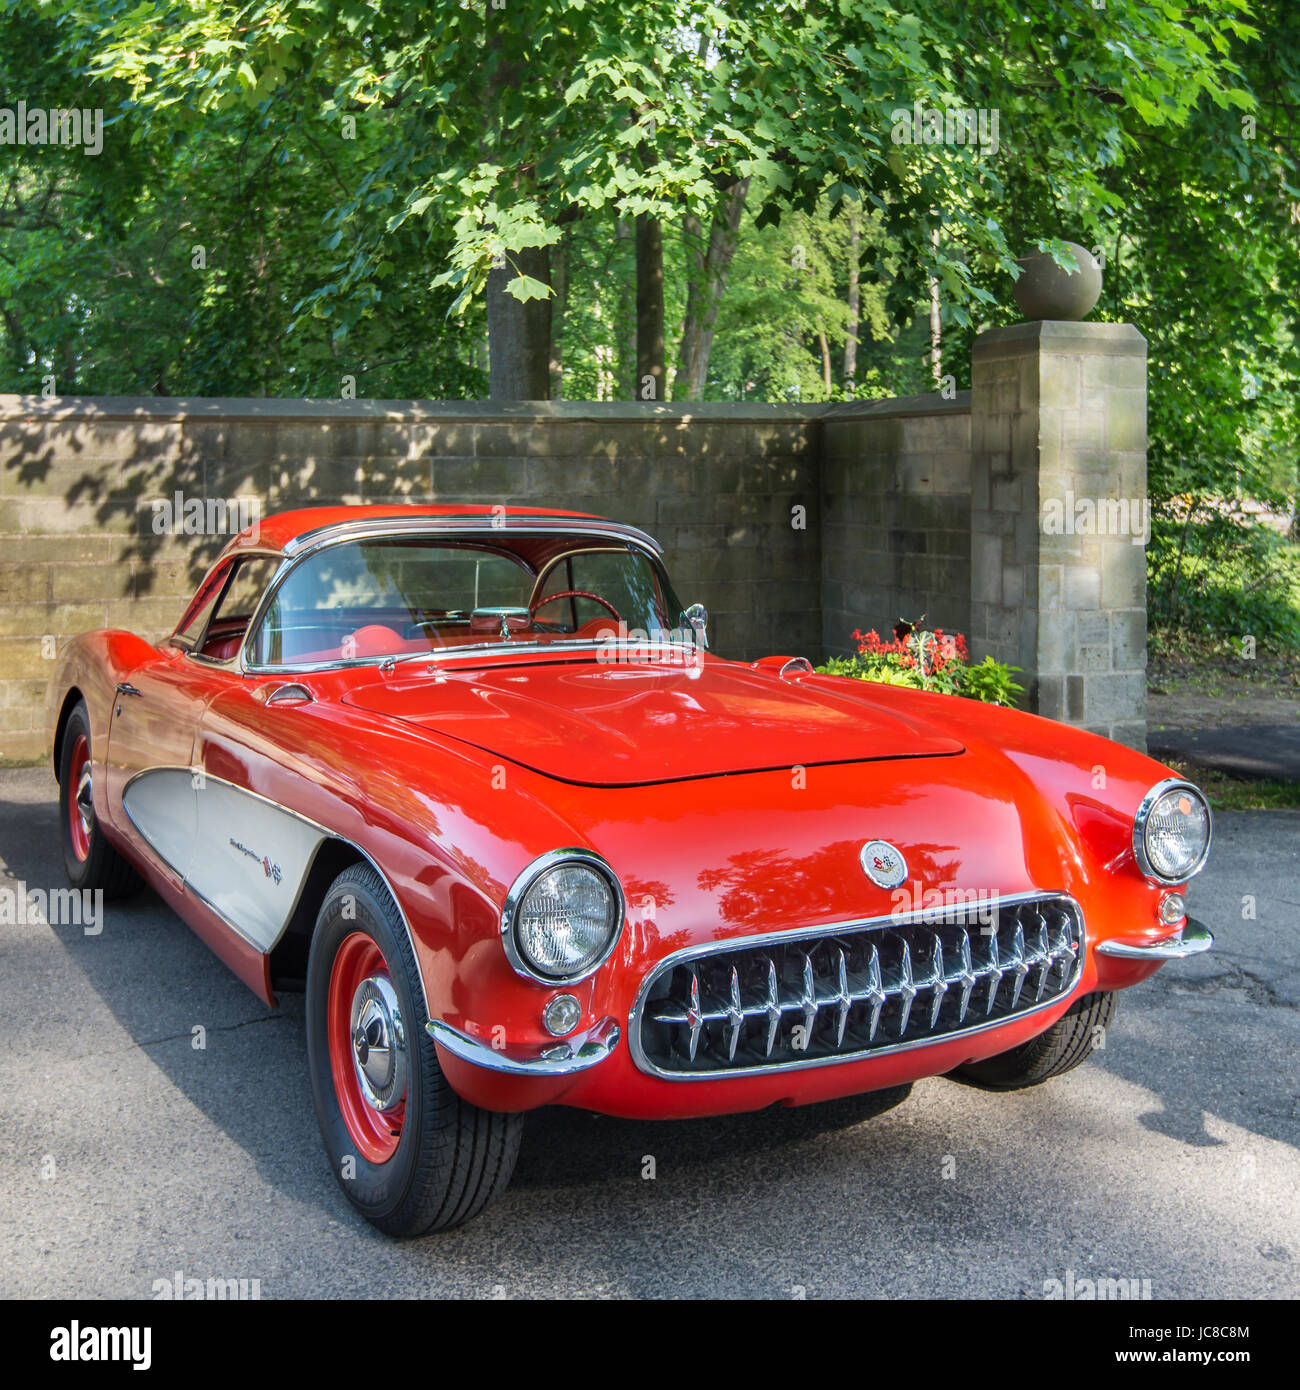 GROSSE POINTE SHORES, MI/USA - JUNE 13, 2017: A 1957 Chevrolet Corvette “Fuelie” car at the EyesOn Design car show. Stock Photo